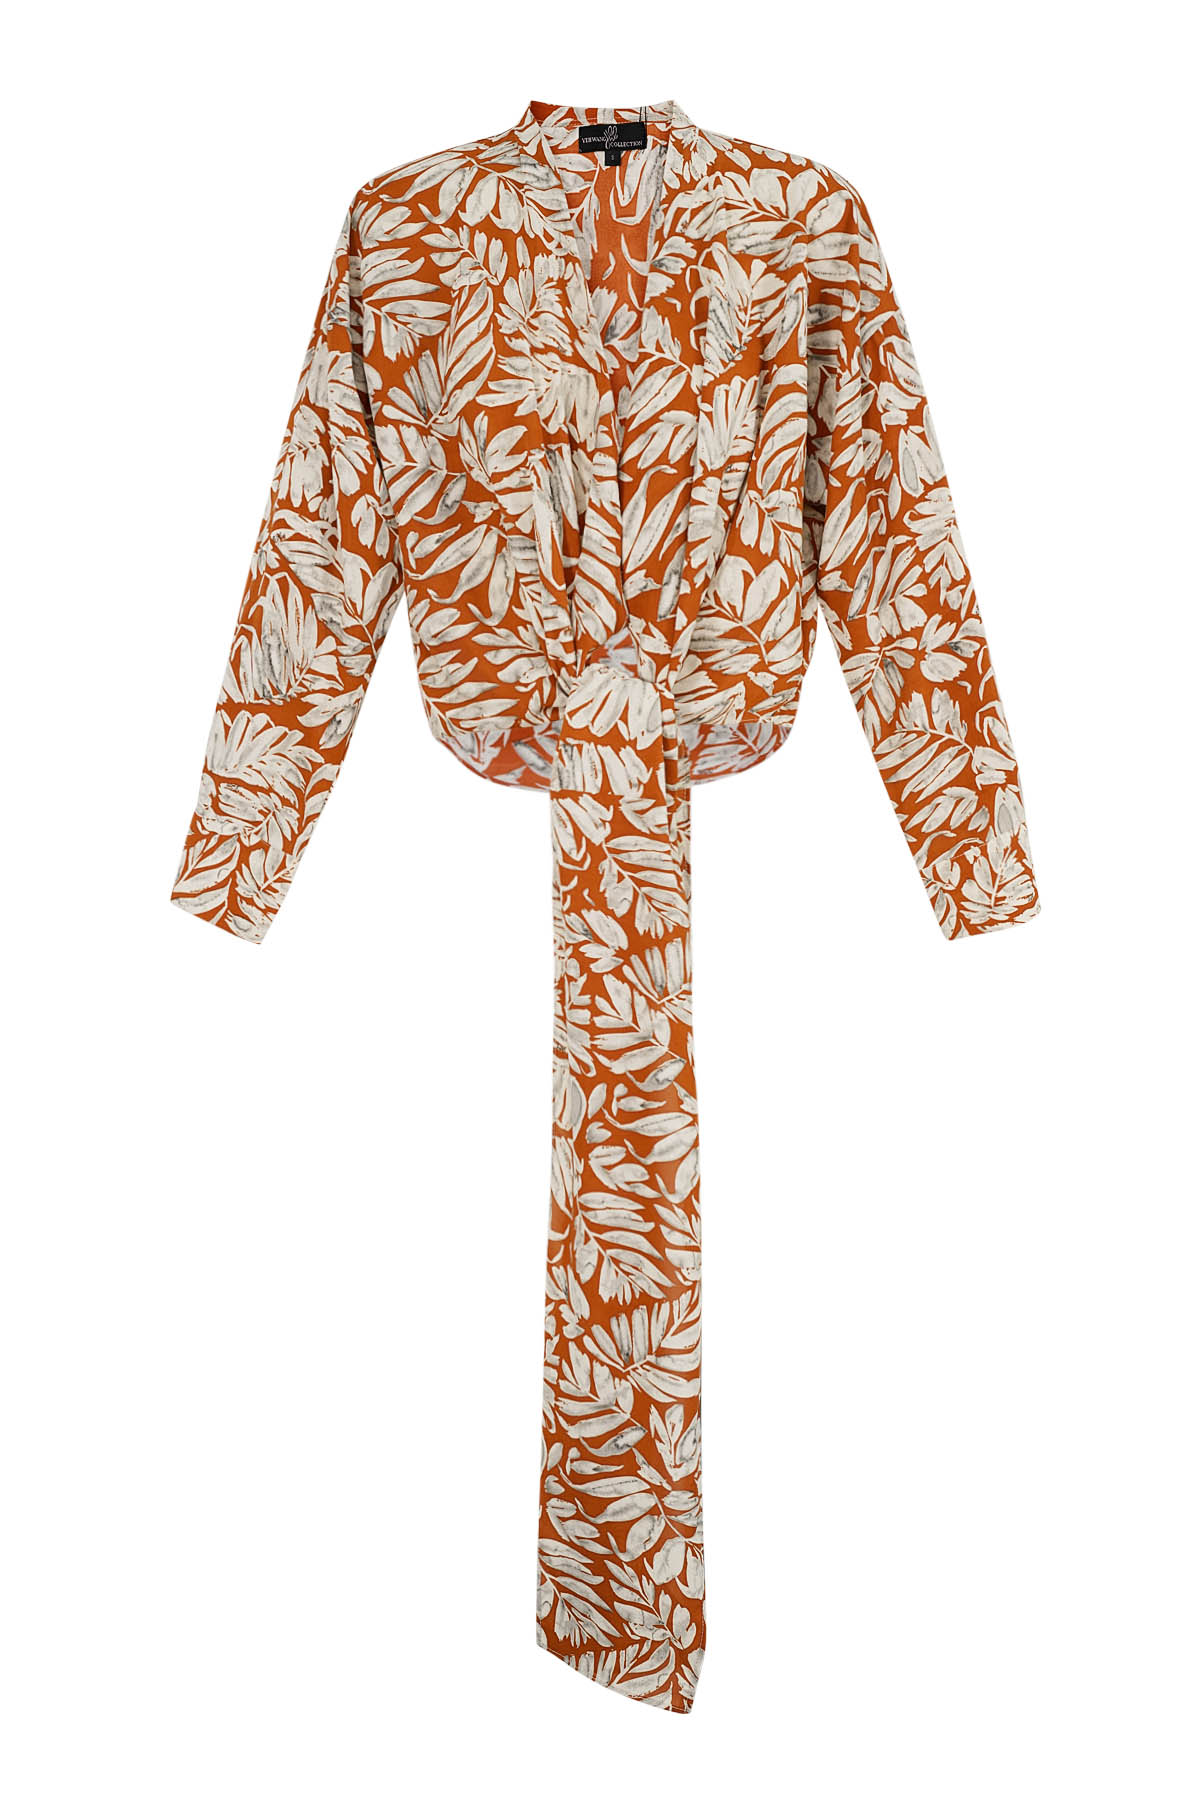 Wrap blouse leaf print orange 